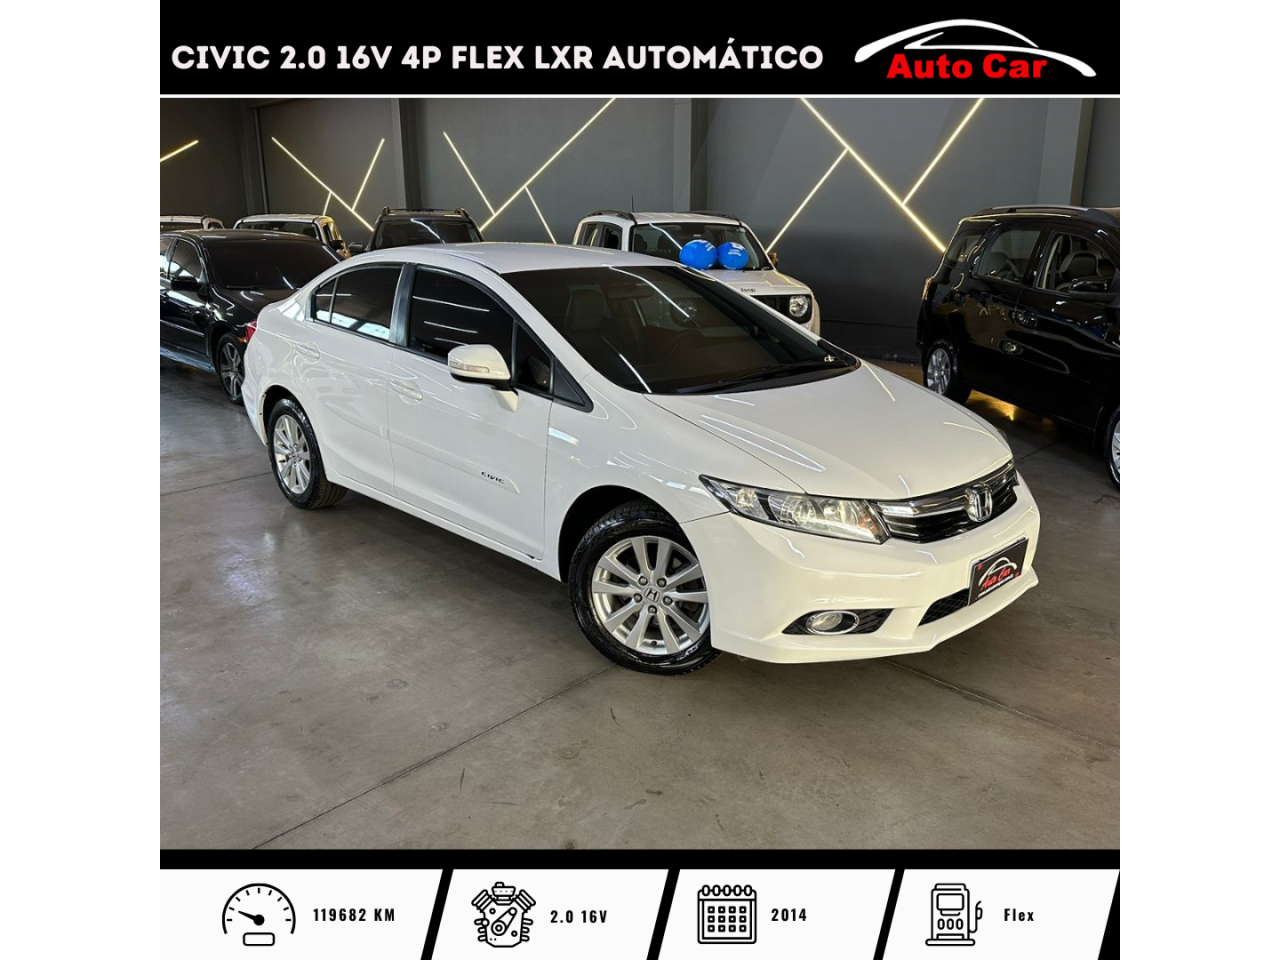 Civic 2.0 16V 4P FLEX LXR AUTOMÁTICO